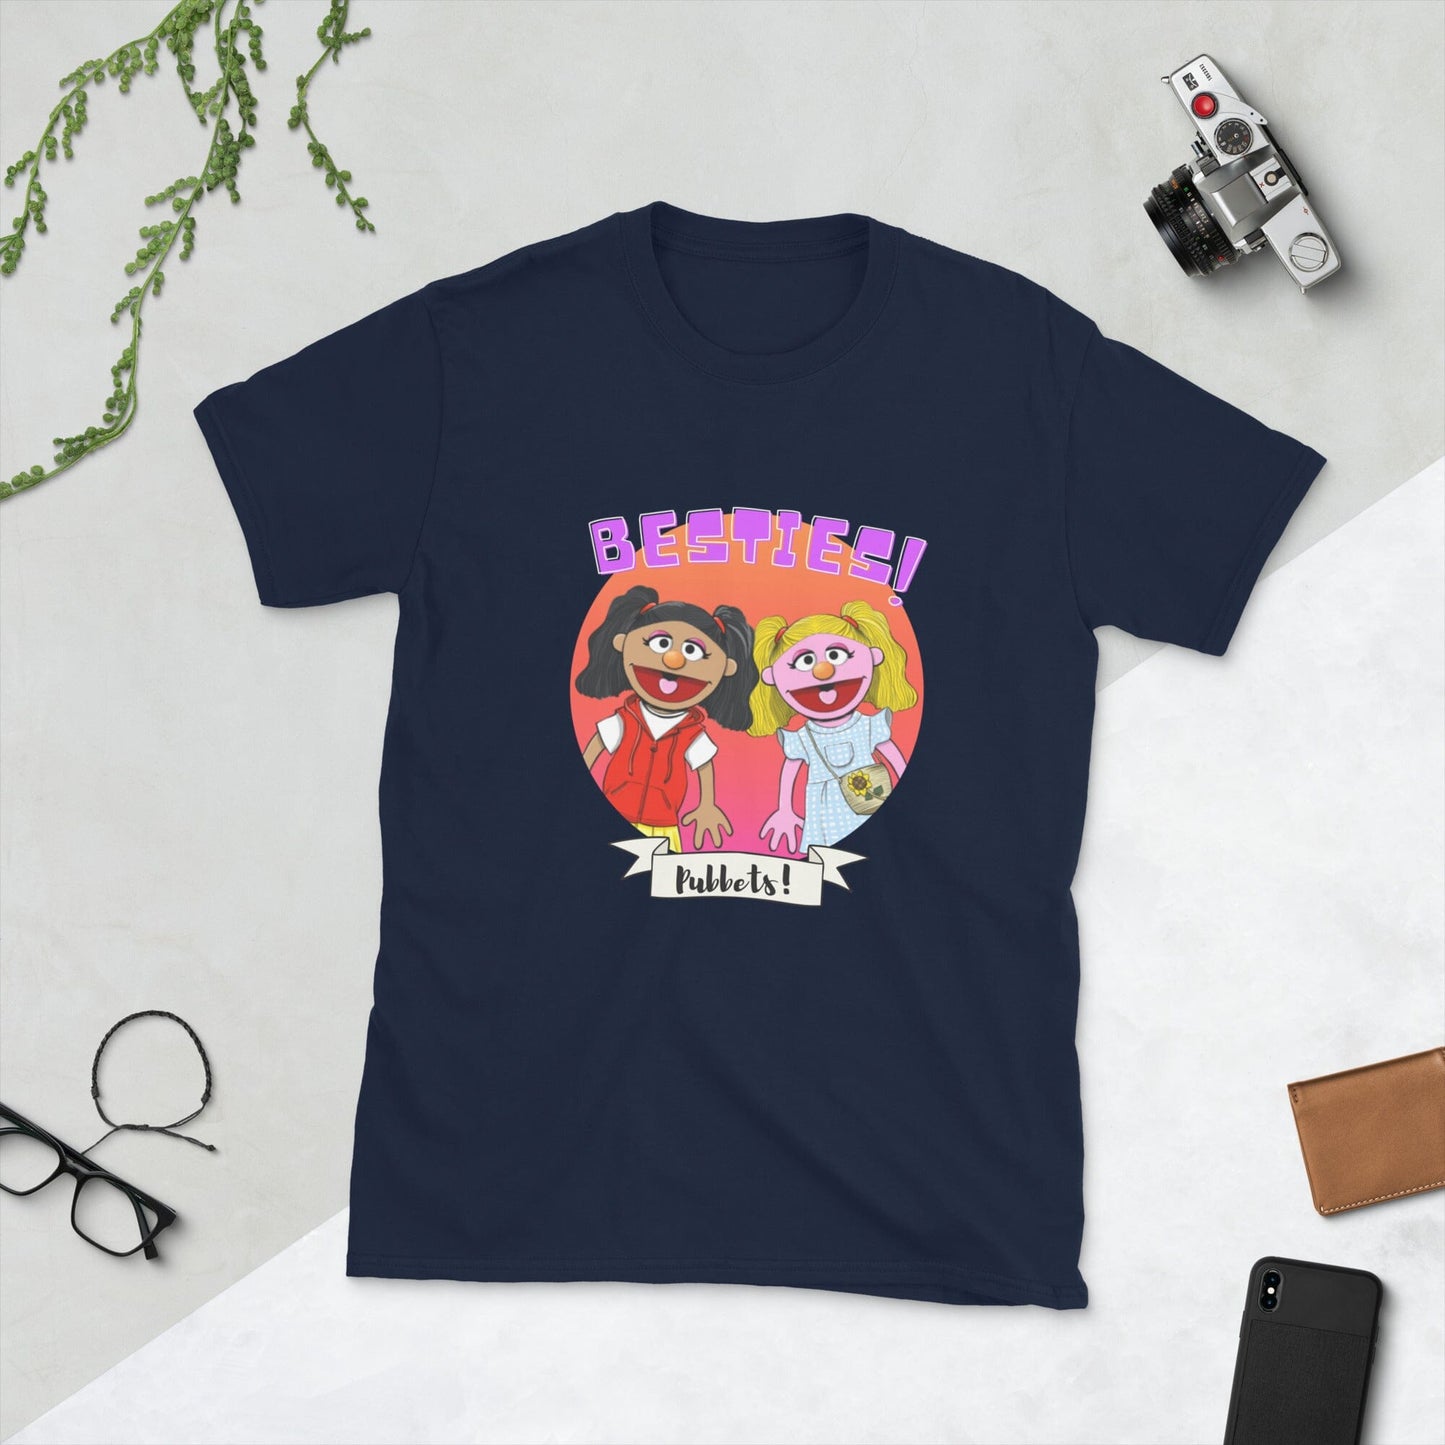 Pubbets Merch Rosey and Josie - Besties! Short-Sleeve Unisex T-Shirt